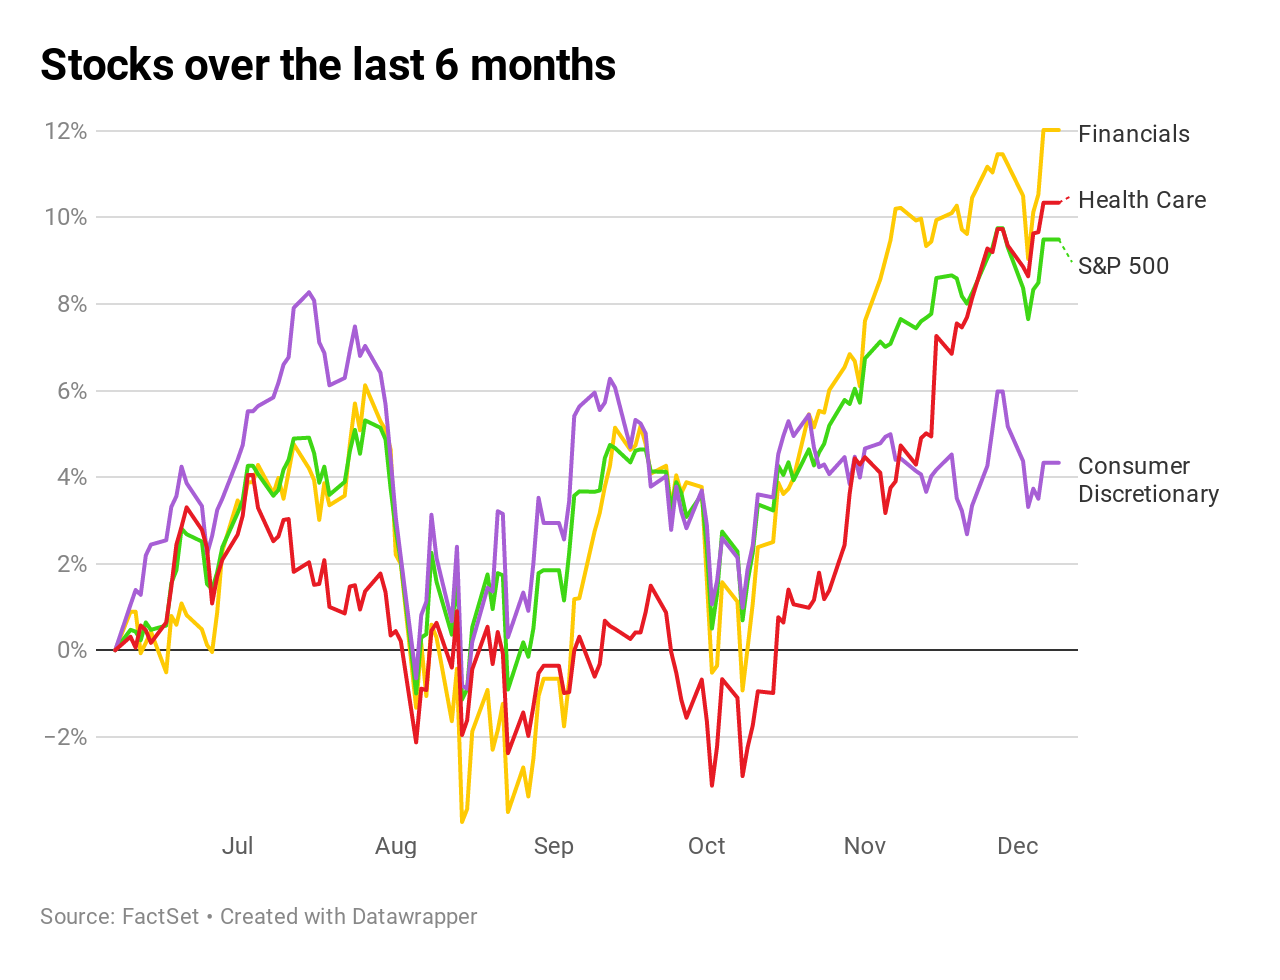 Morgan Stanley Org Chart